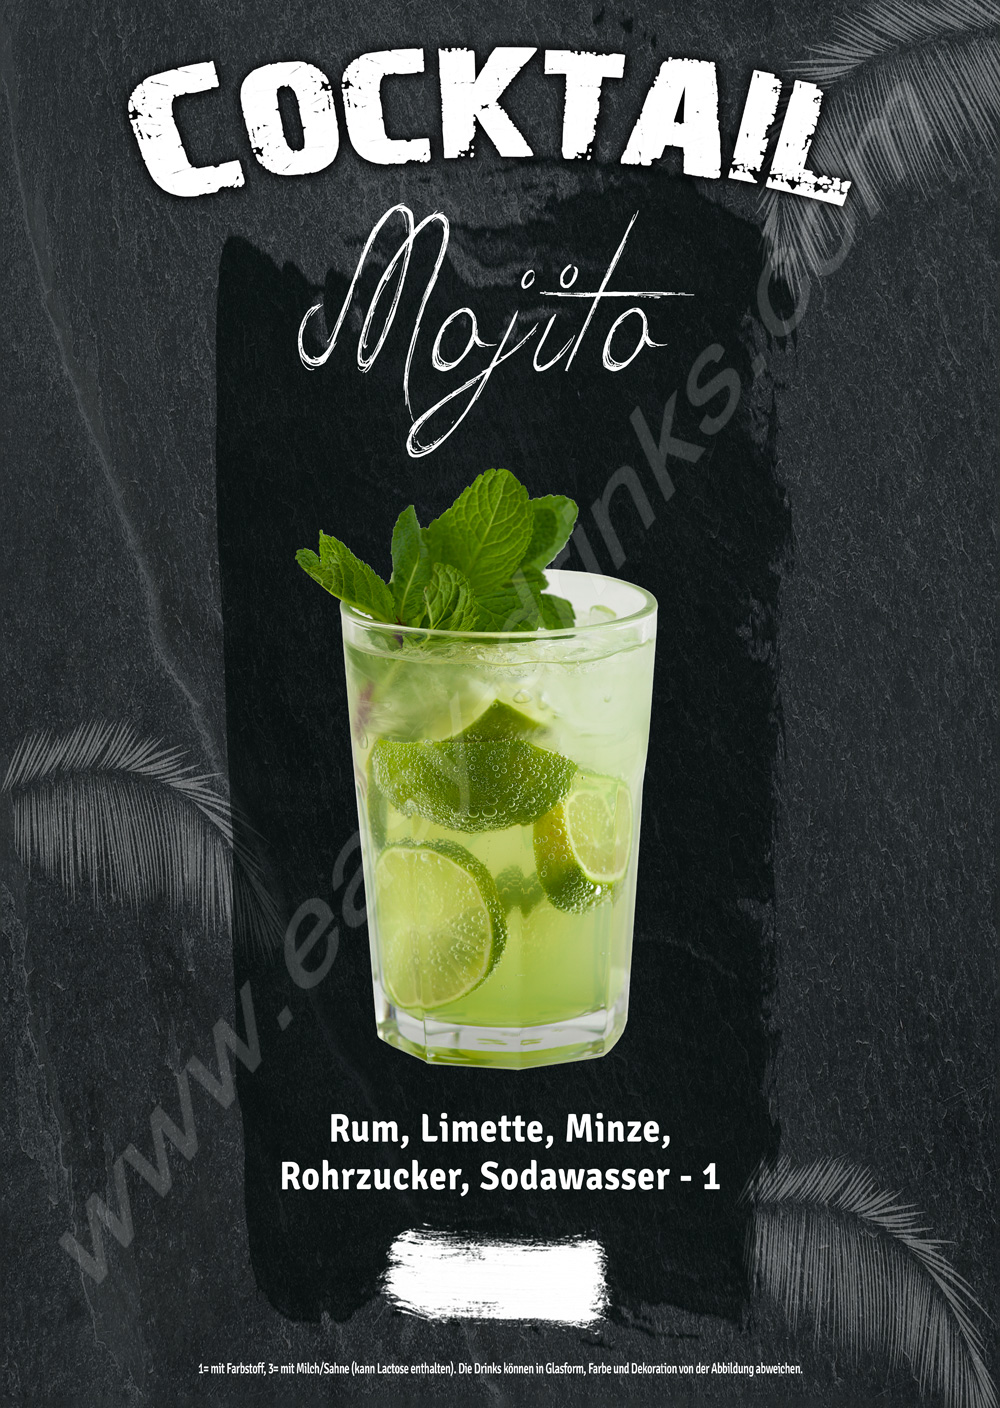 Mojito / Fertigcocktail / 38% Vol. 0,7 ltr. / easy drinks